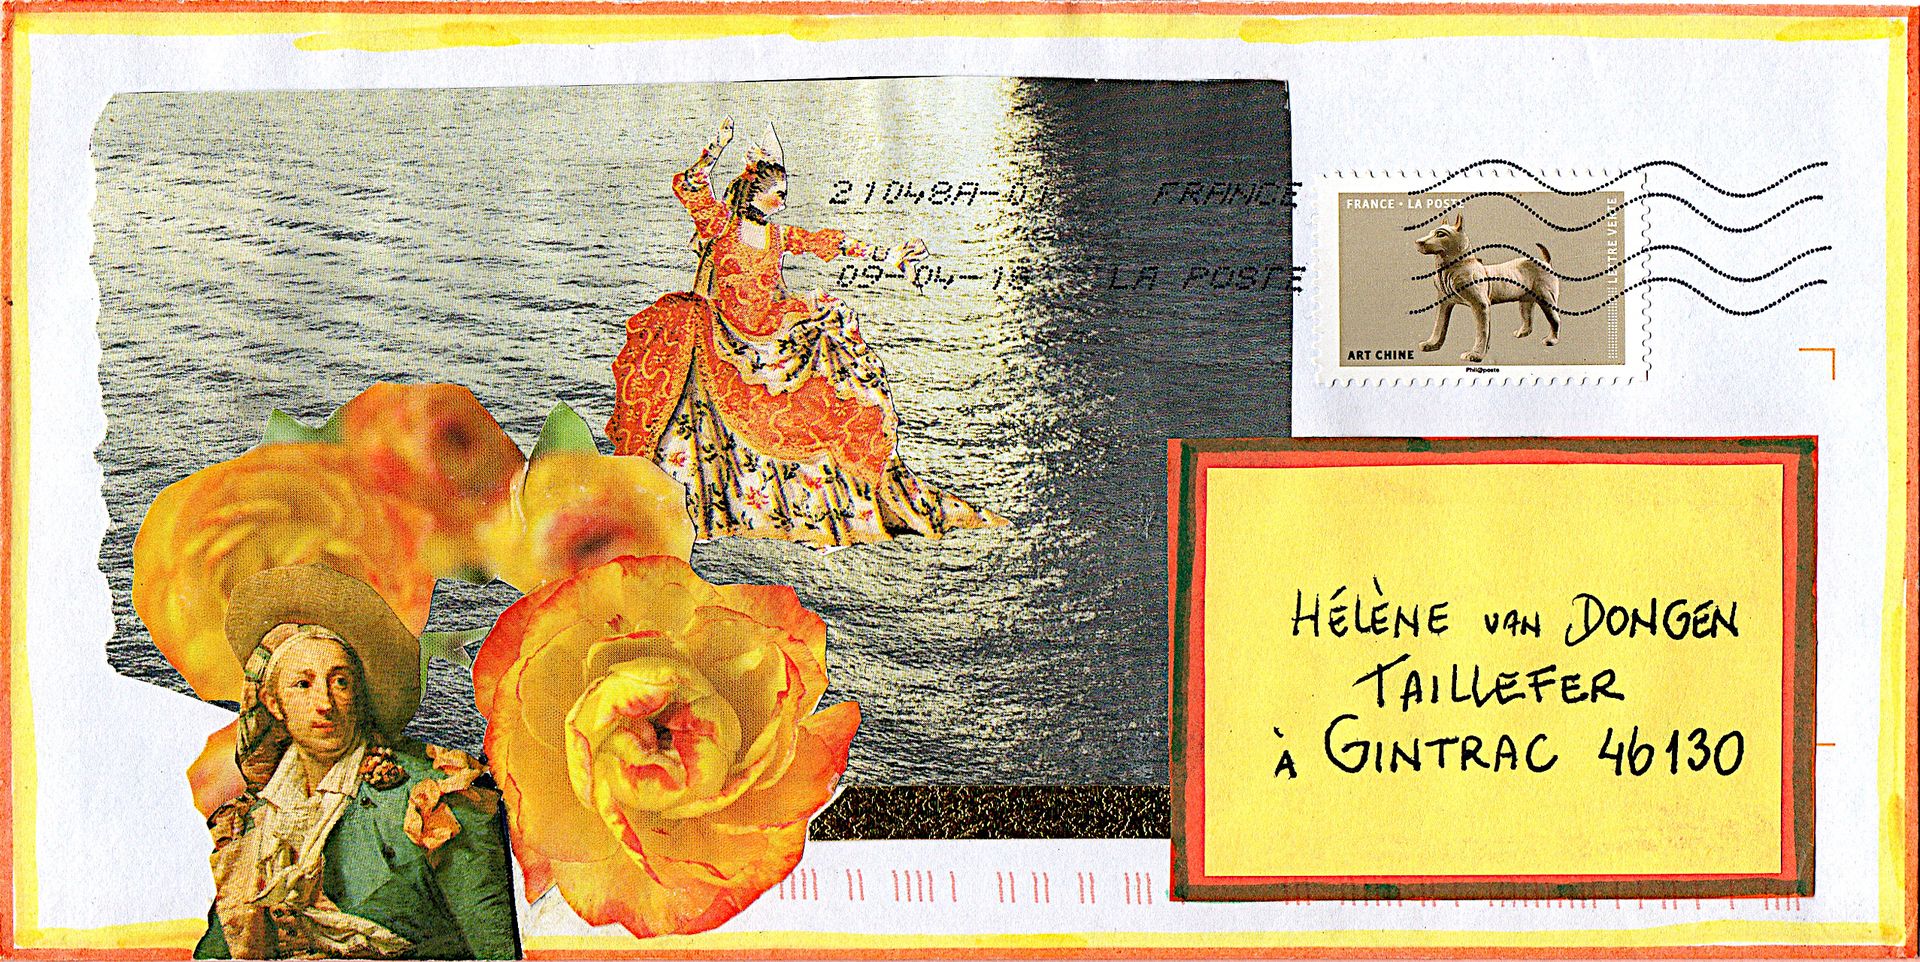 GAERTNER Coco Sulle onde / Busta bifacciale di mail-art / Collage su carta / Fir&hellip;